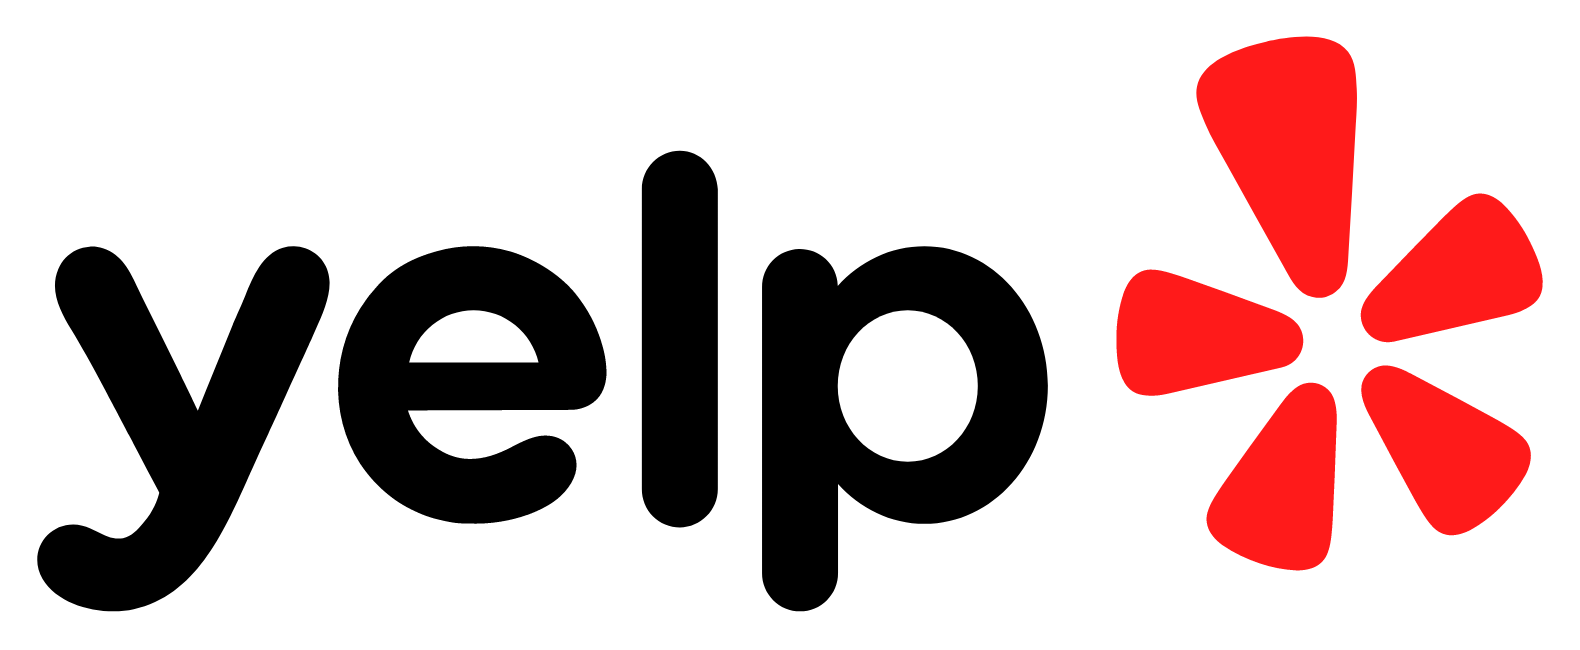 Yelp logo large (transparent PNG)